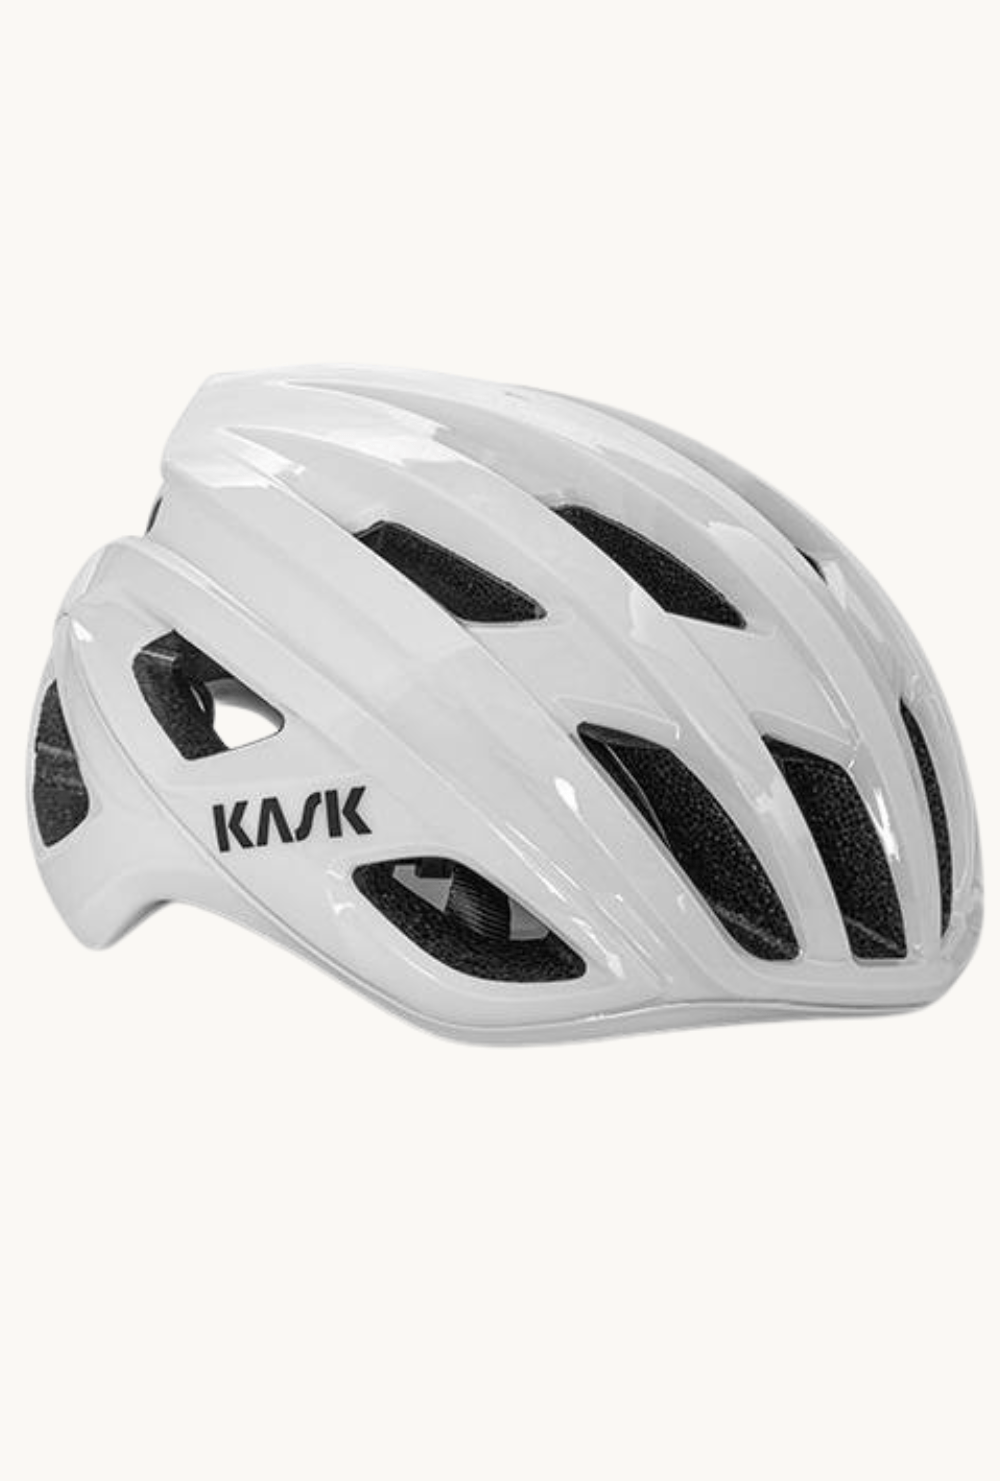 Helmet - Kask Mojito Whitelarge / White